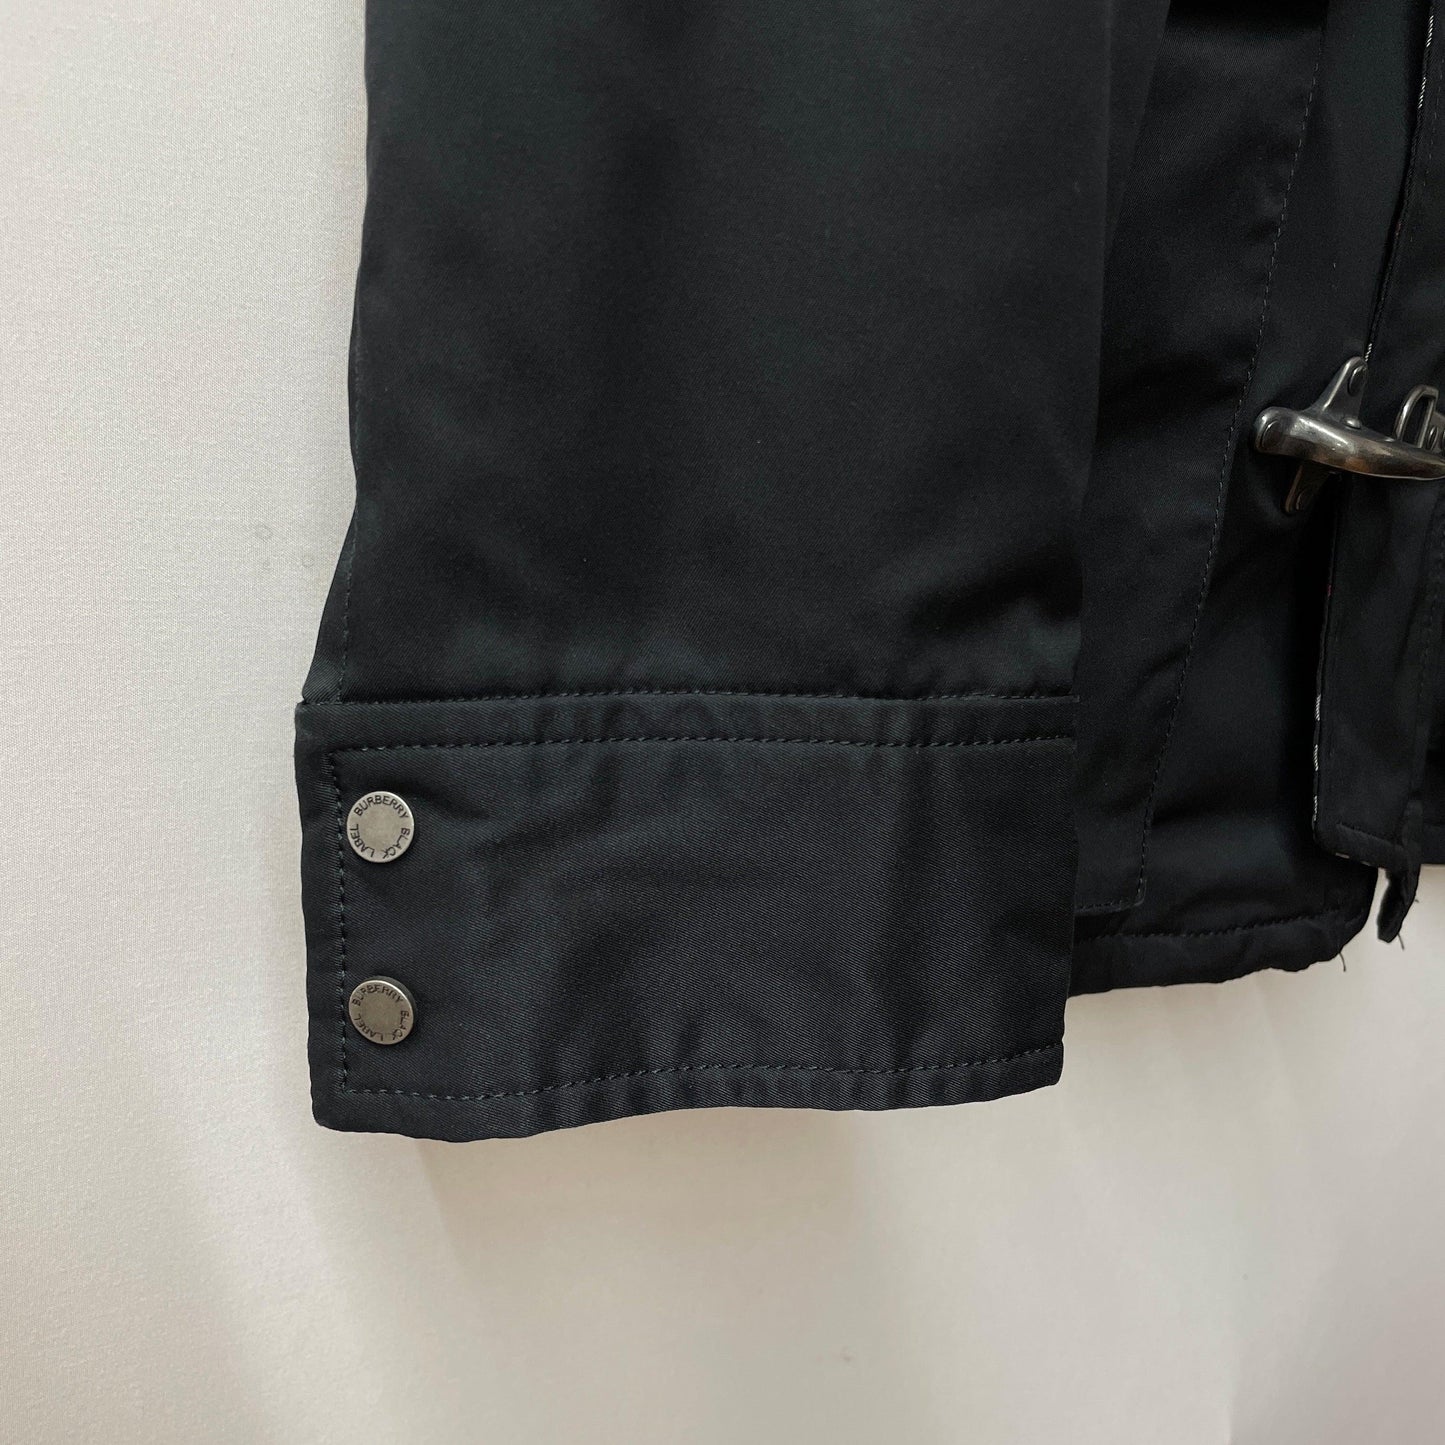 burberry black label fireman jacket